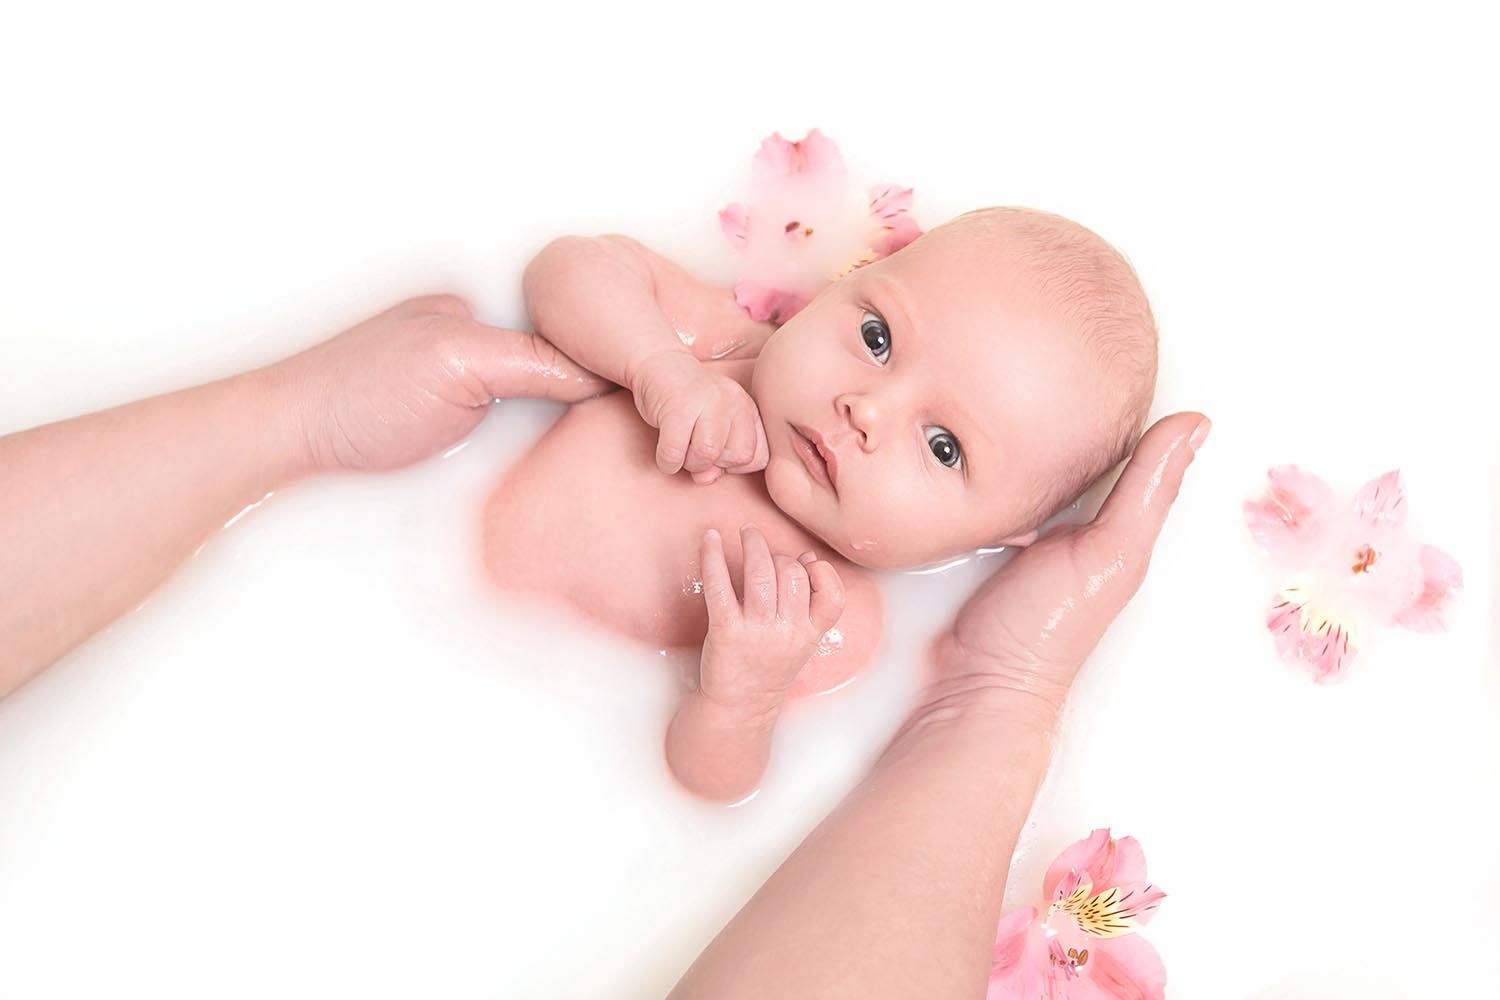 baby lying in milk bath by holding under head